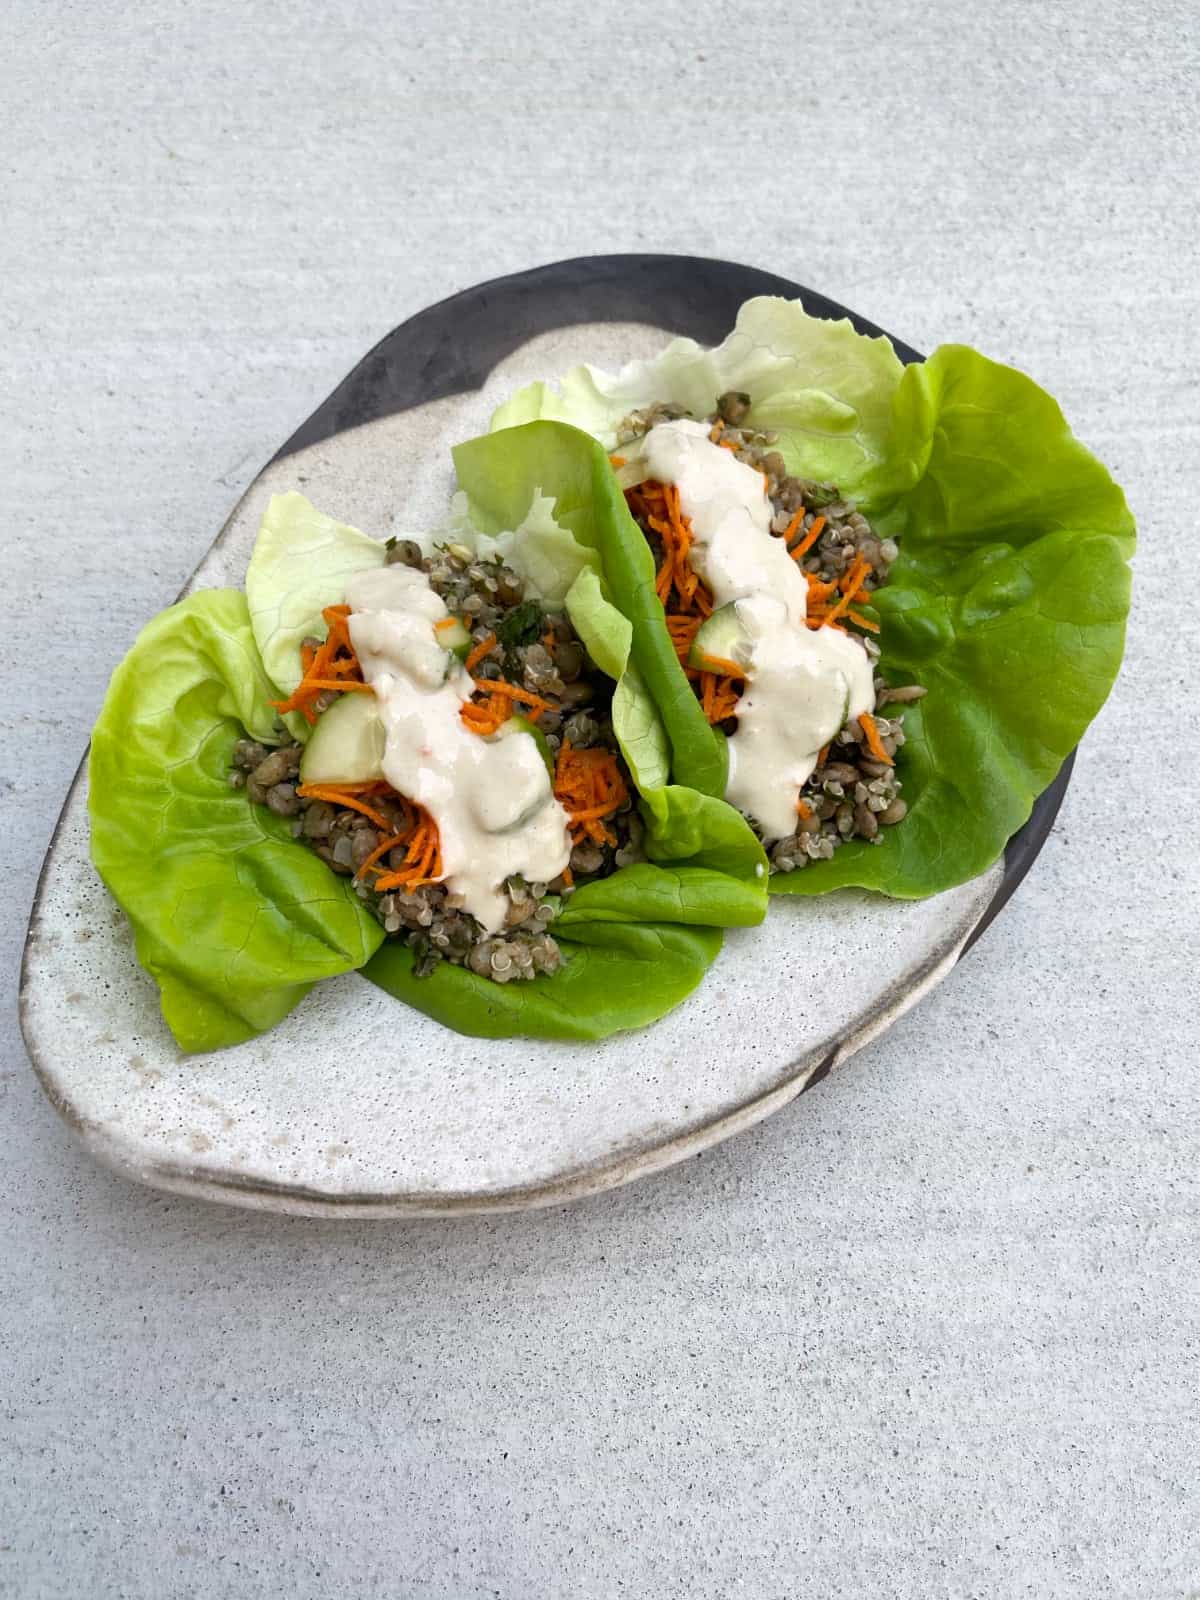 Mediterranean lettuce wraps with lentils and quinoa on ceramic plate.